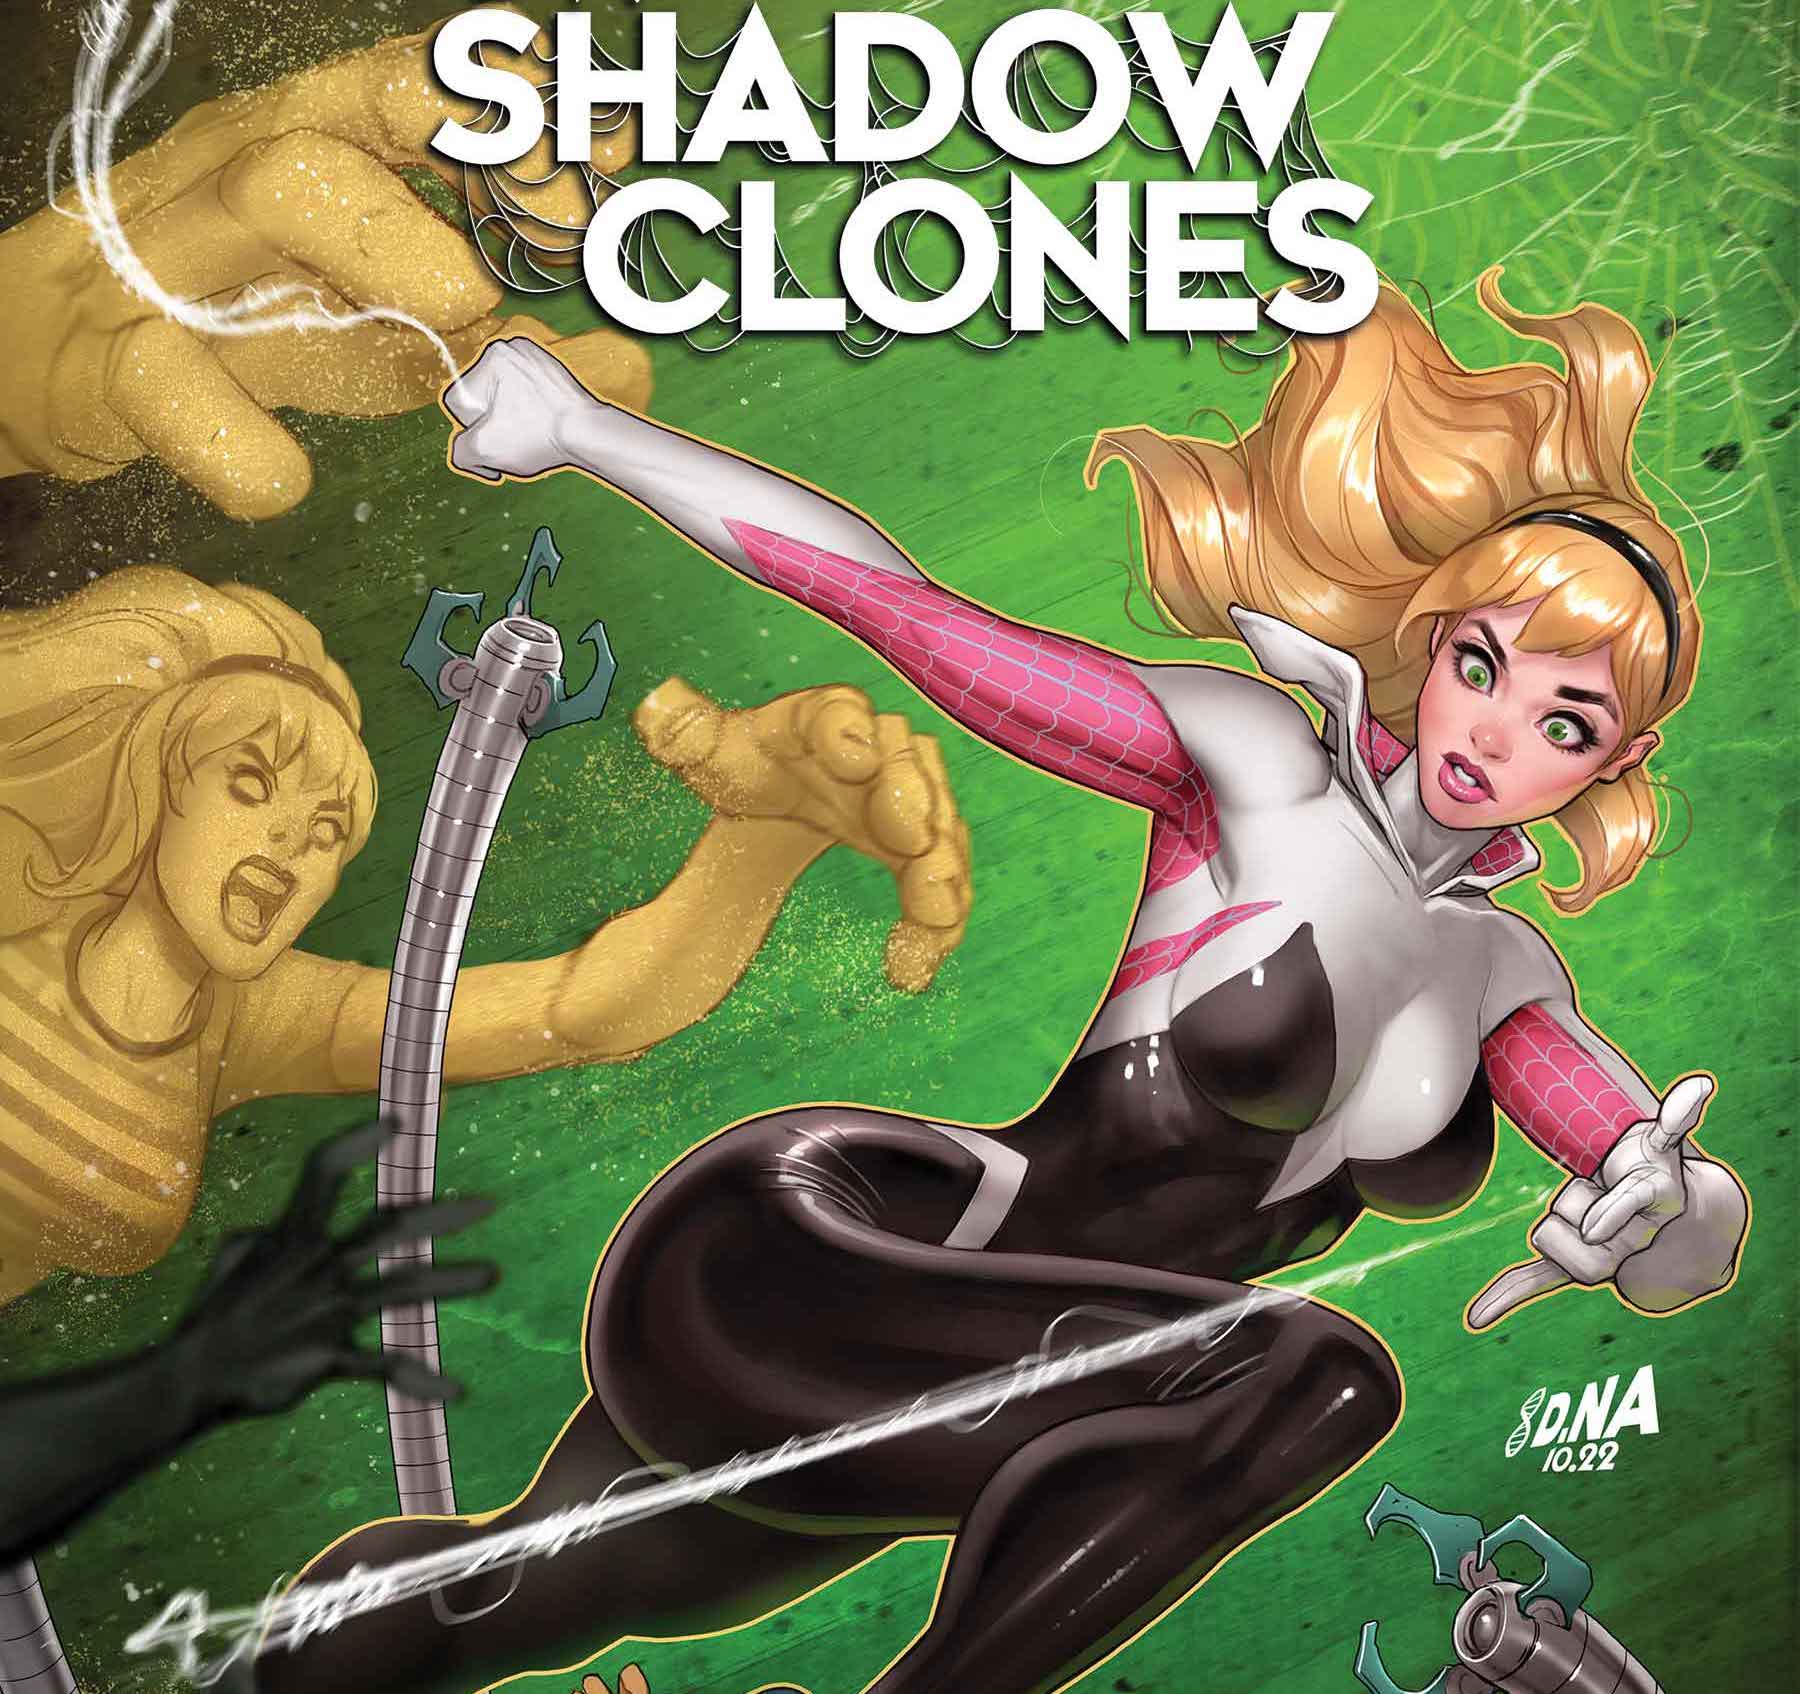 EXCLUSIVE Marvel Comics Preview: Spider-Gwen: Shadow Clones #1